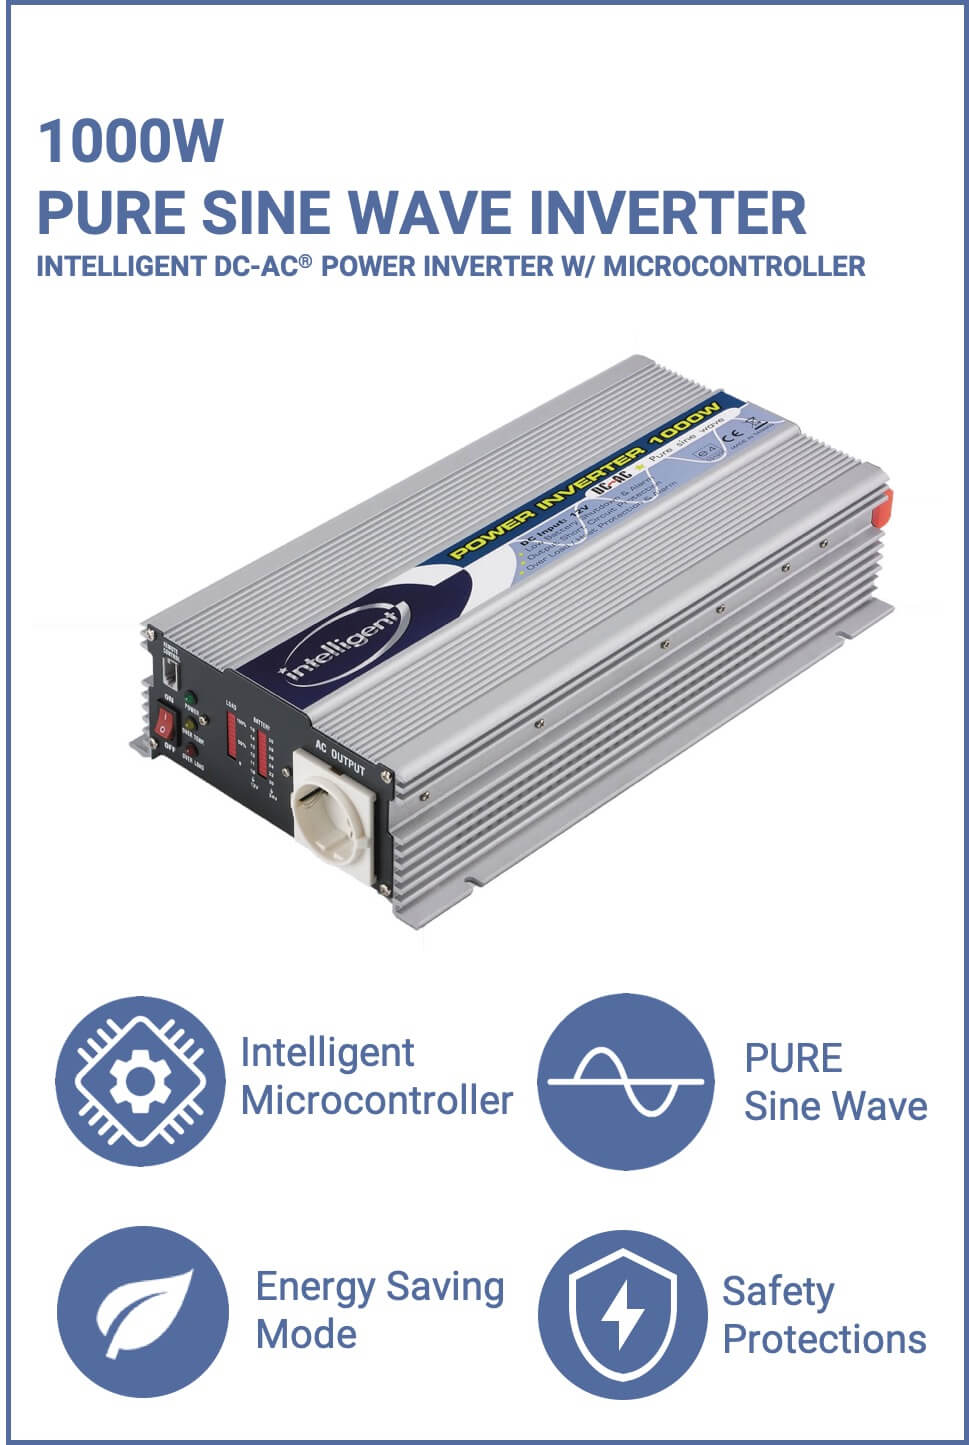 1000W Pure Sine Wave Power Inverter - Intelligent DC-AC® with